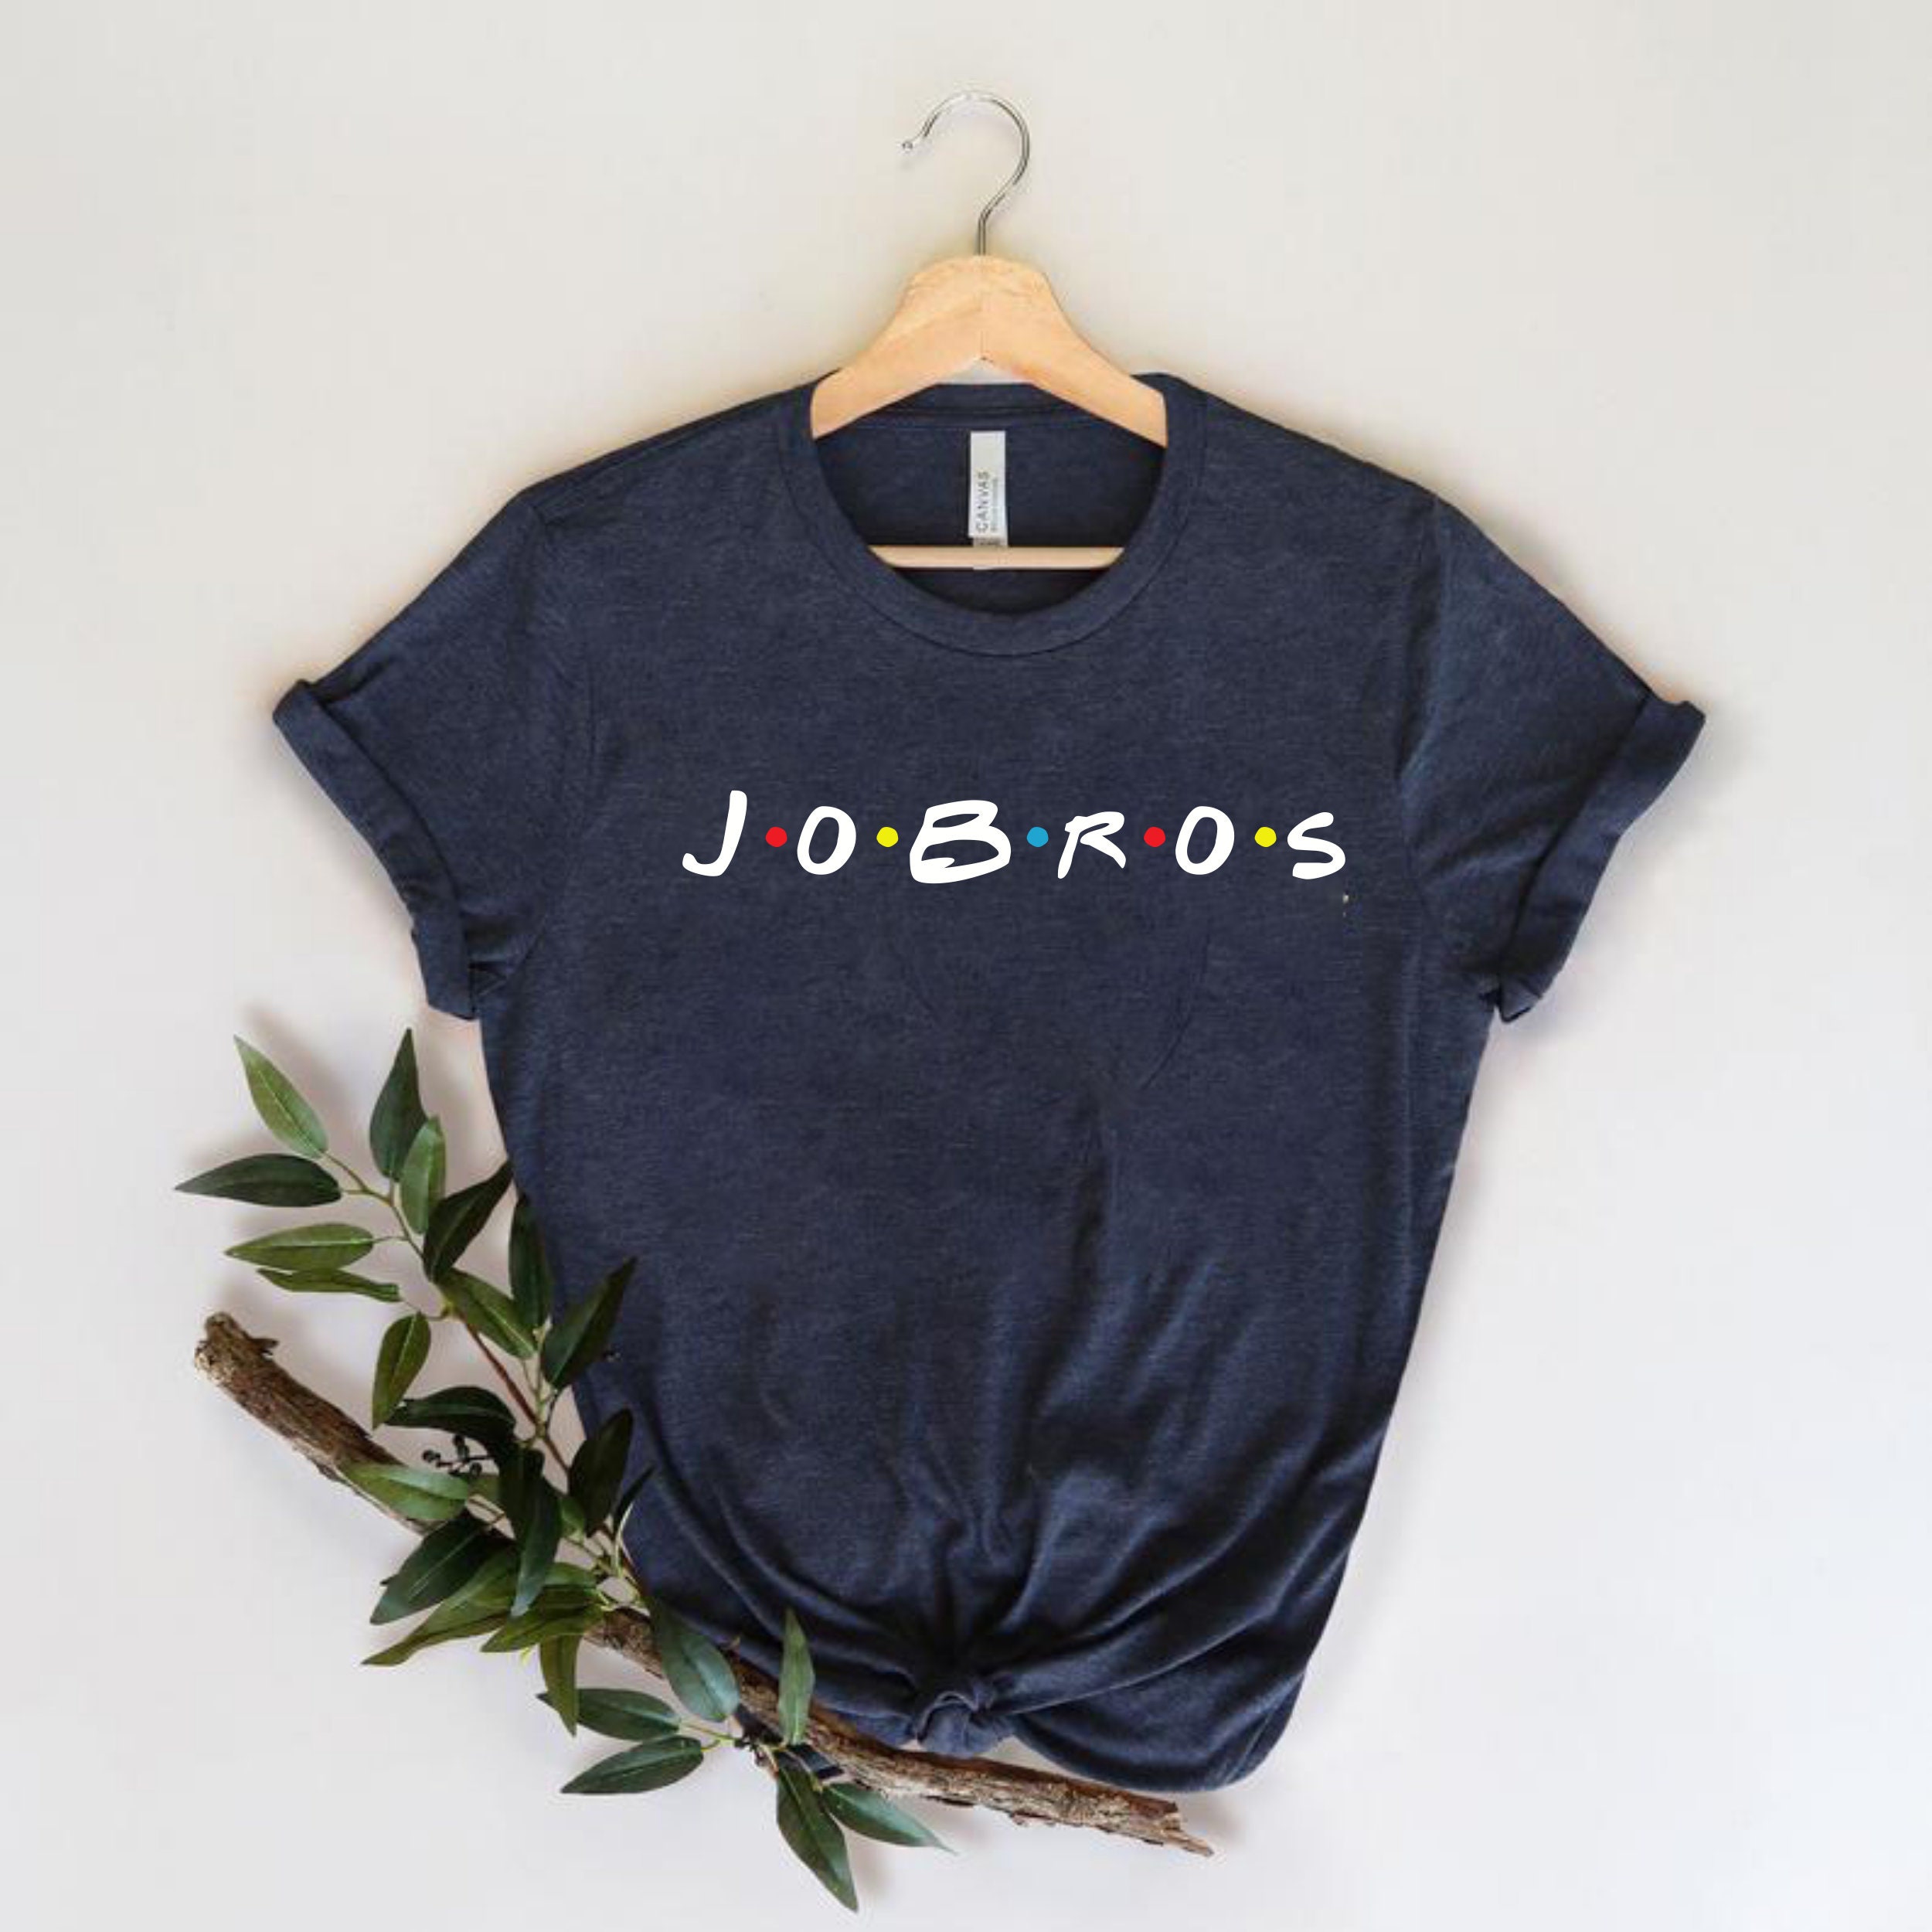 Jonas Brothers Boyband Tour Tshirt Bella Canvas Gift for Fan Unisex Premium Shirt Happiness 2019 Music Big Fans T-shirt 